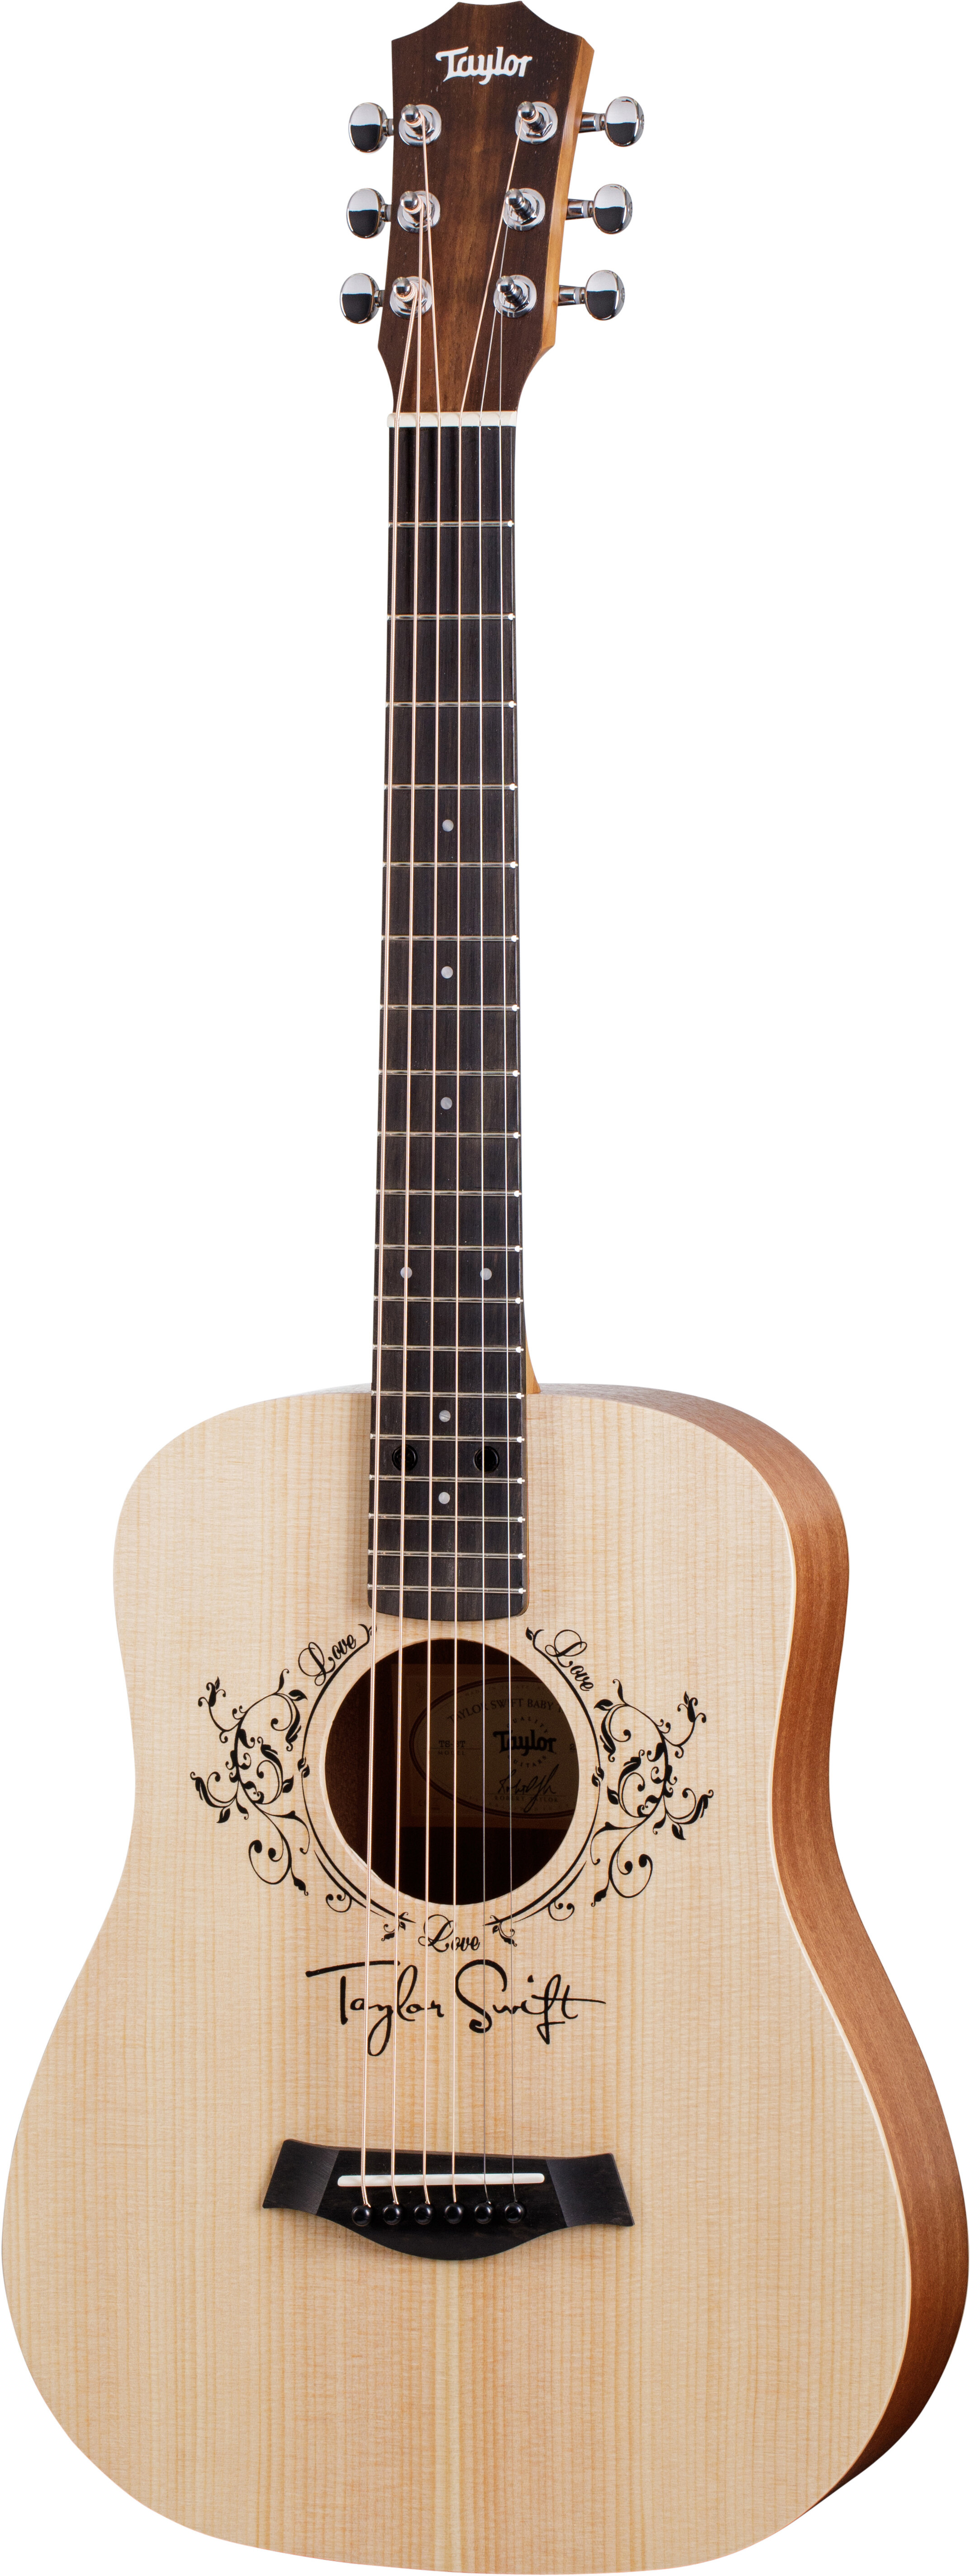 Taylor TSBT Taylor Swift Acoustic Guitar -  Taylor Guitars, TSBT-22